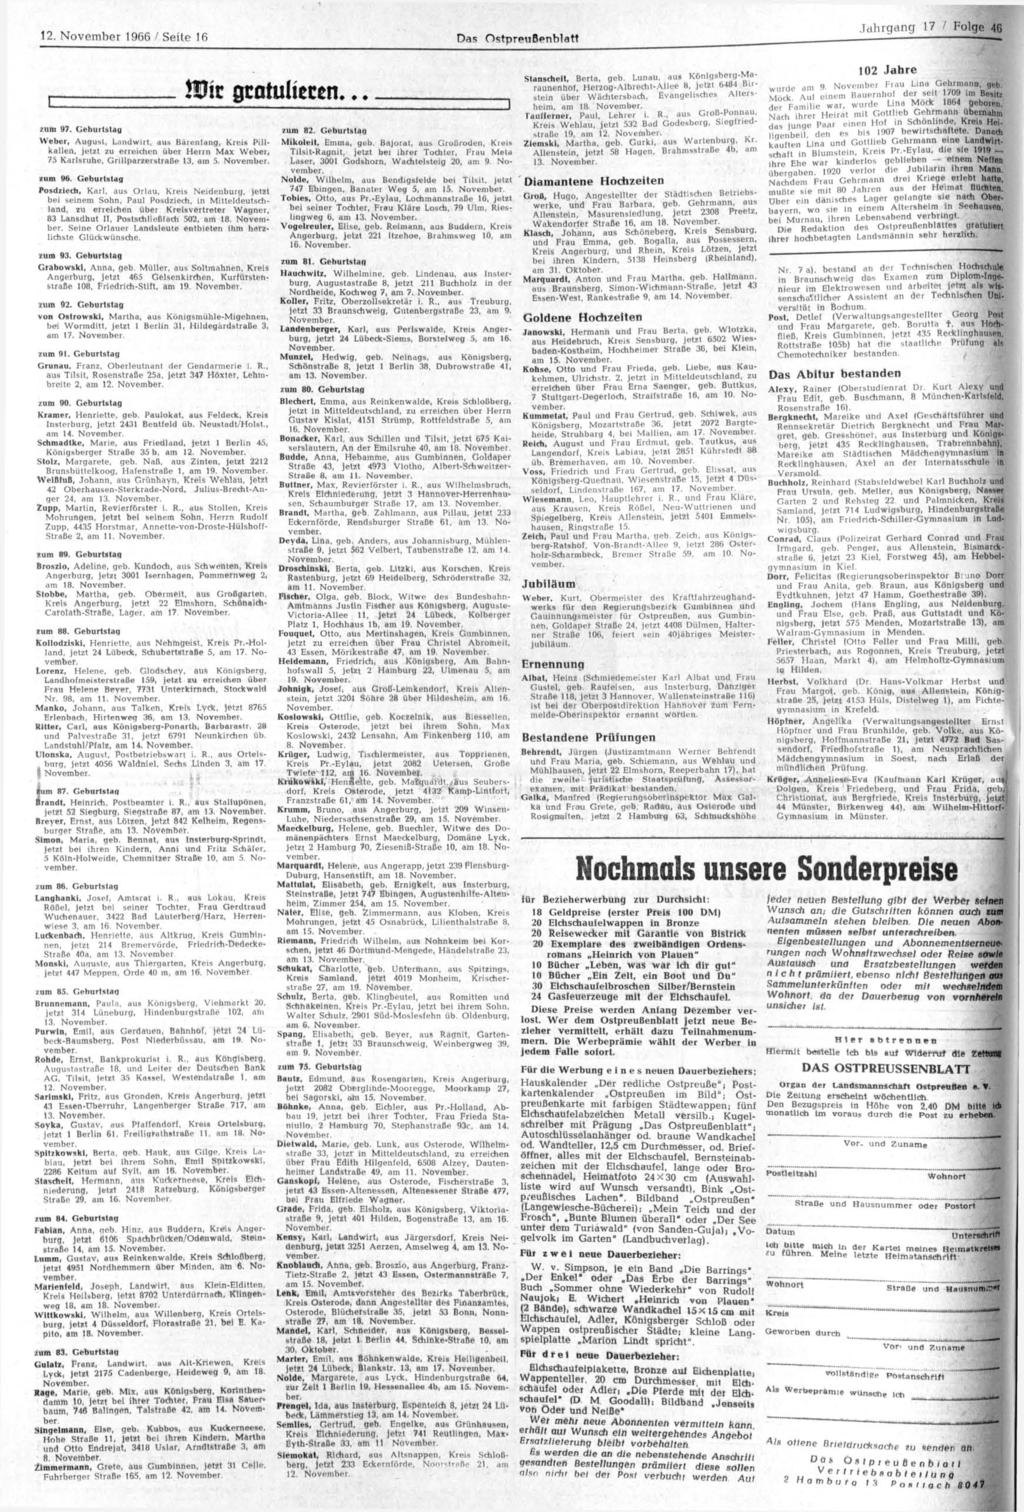 12. November 1966 / Seite 16 Das Ostpreußenblatt.lahrgang 17 / Folge 46 Wk zum 97.